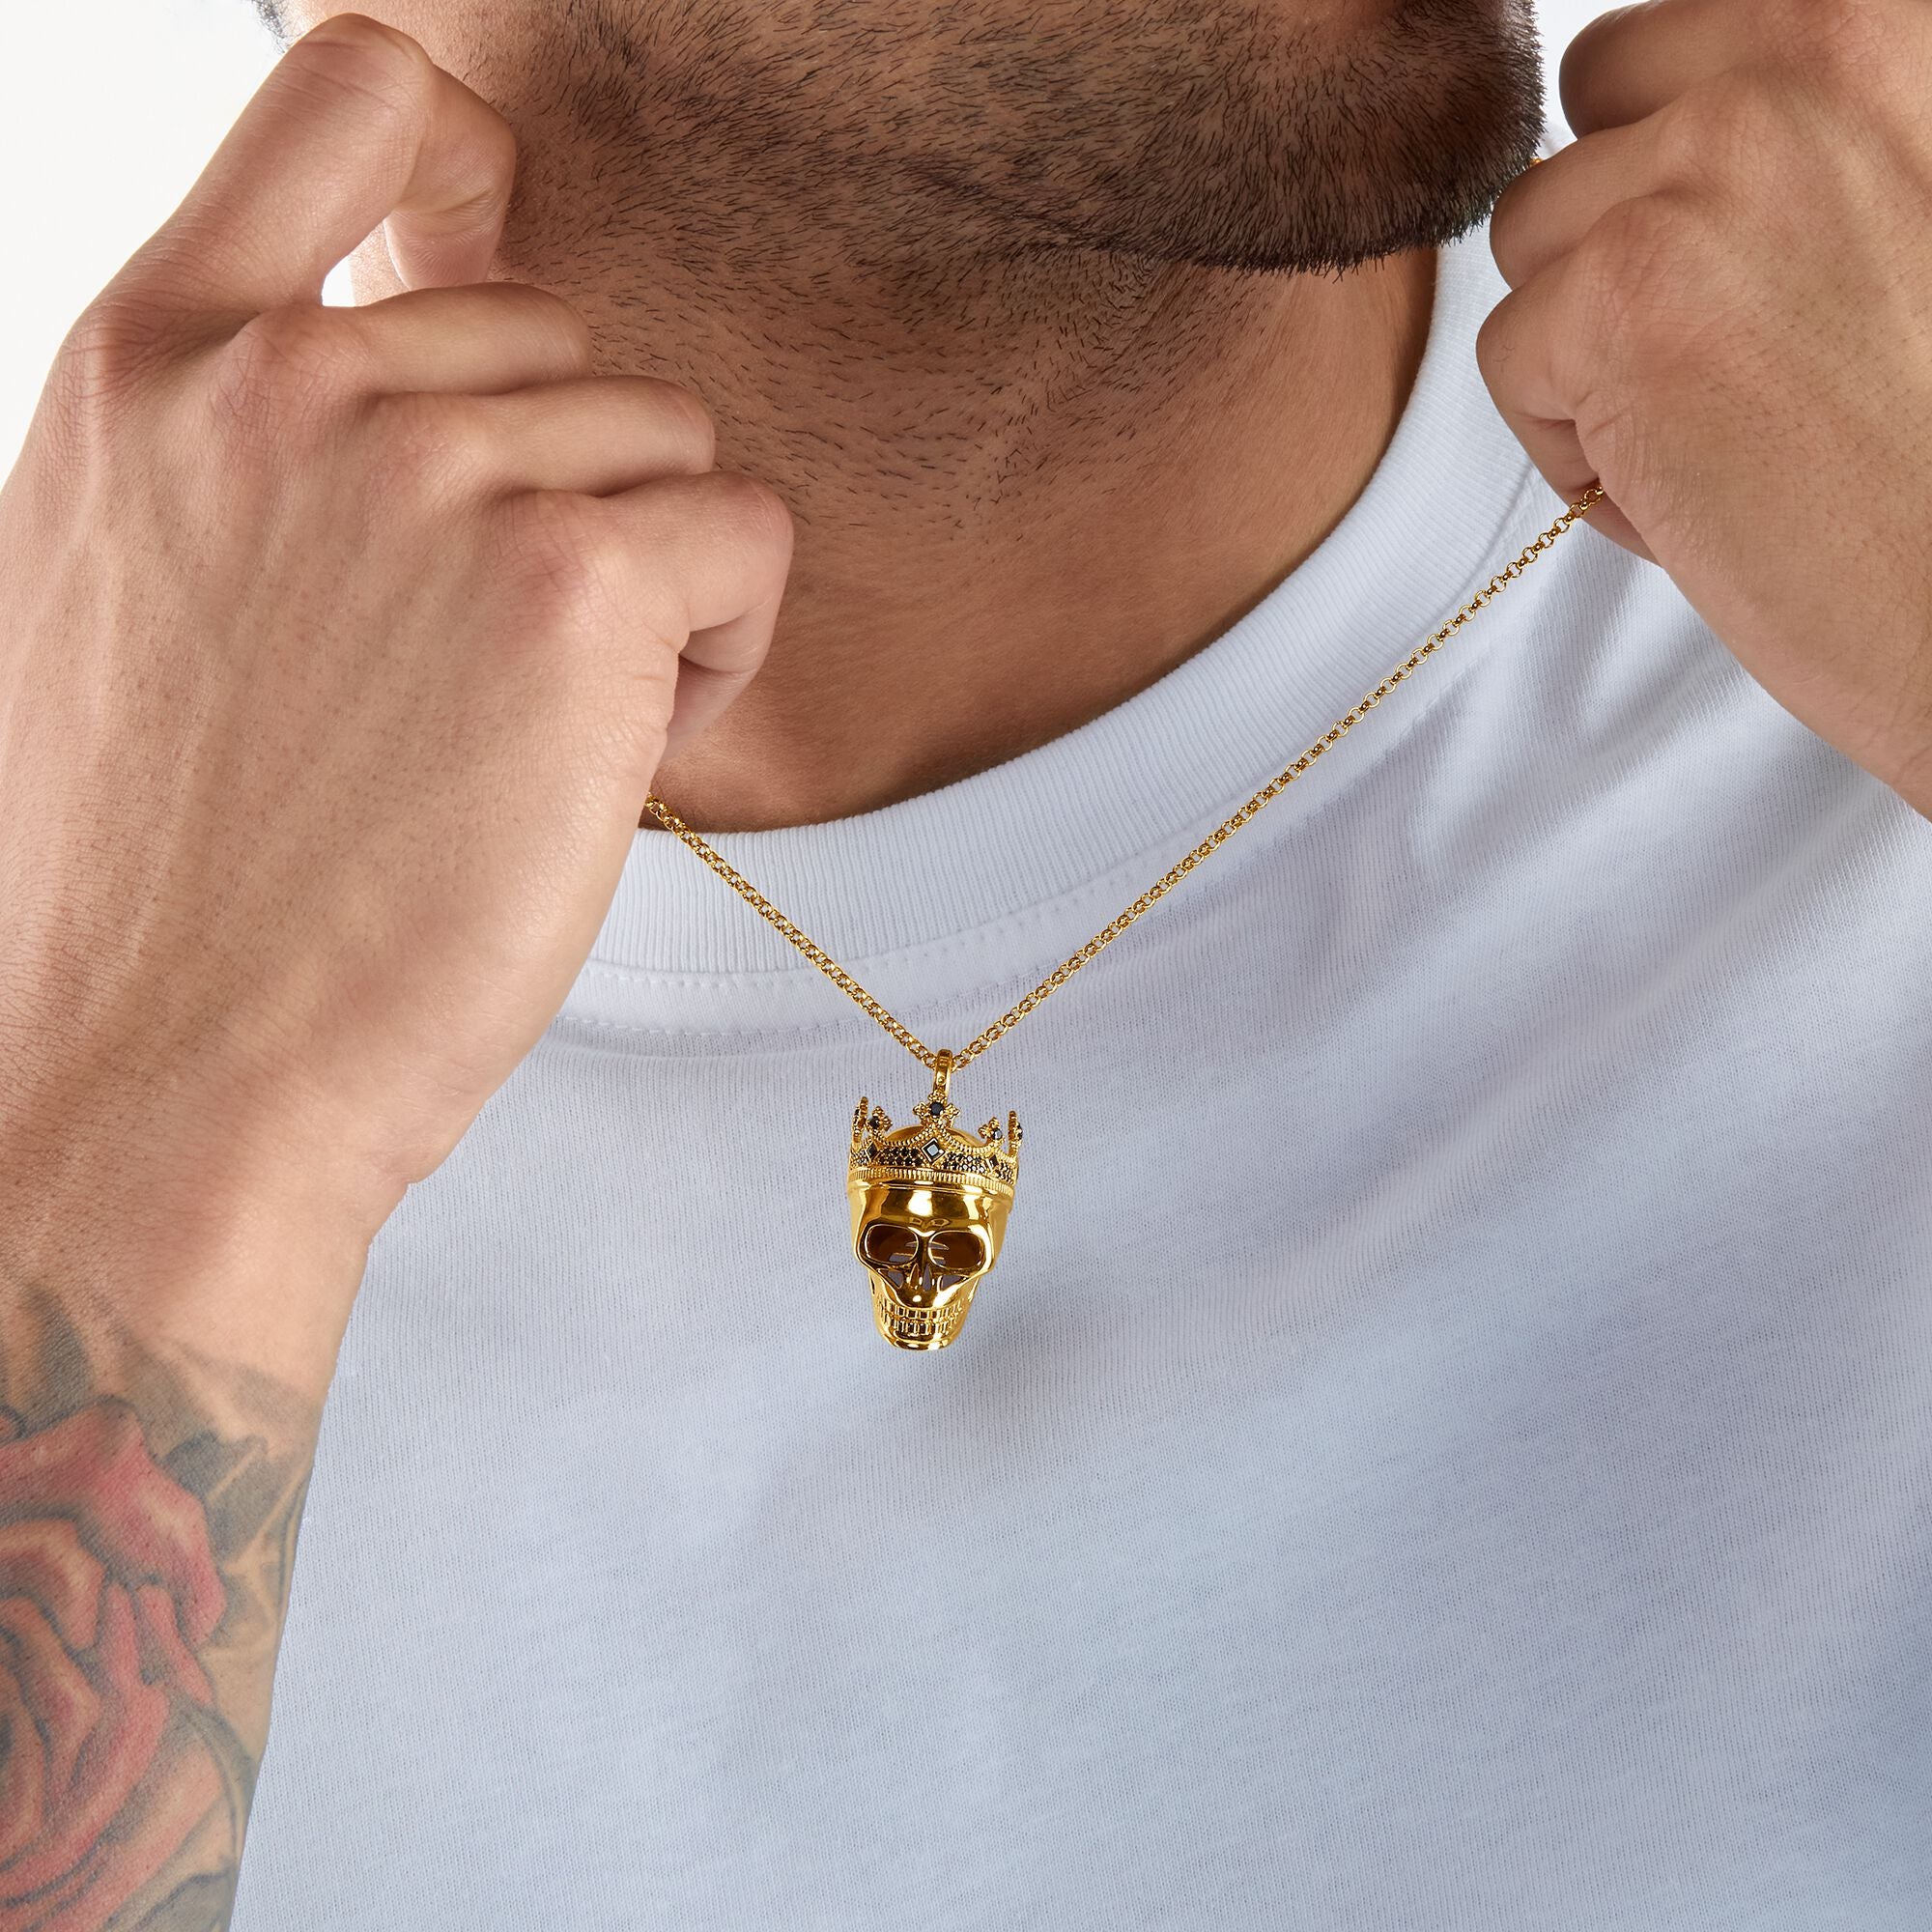 Thomas Sabo 18k Yellow Gold Plating Skull King Pendant on a chain around a man's neck